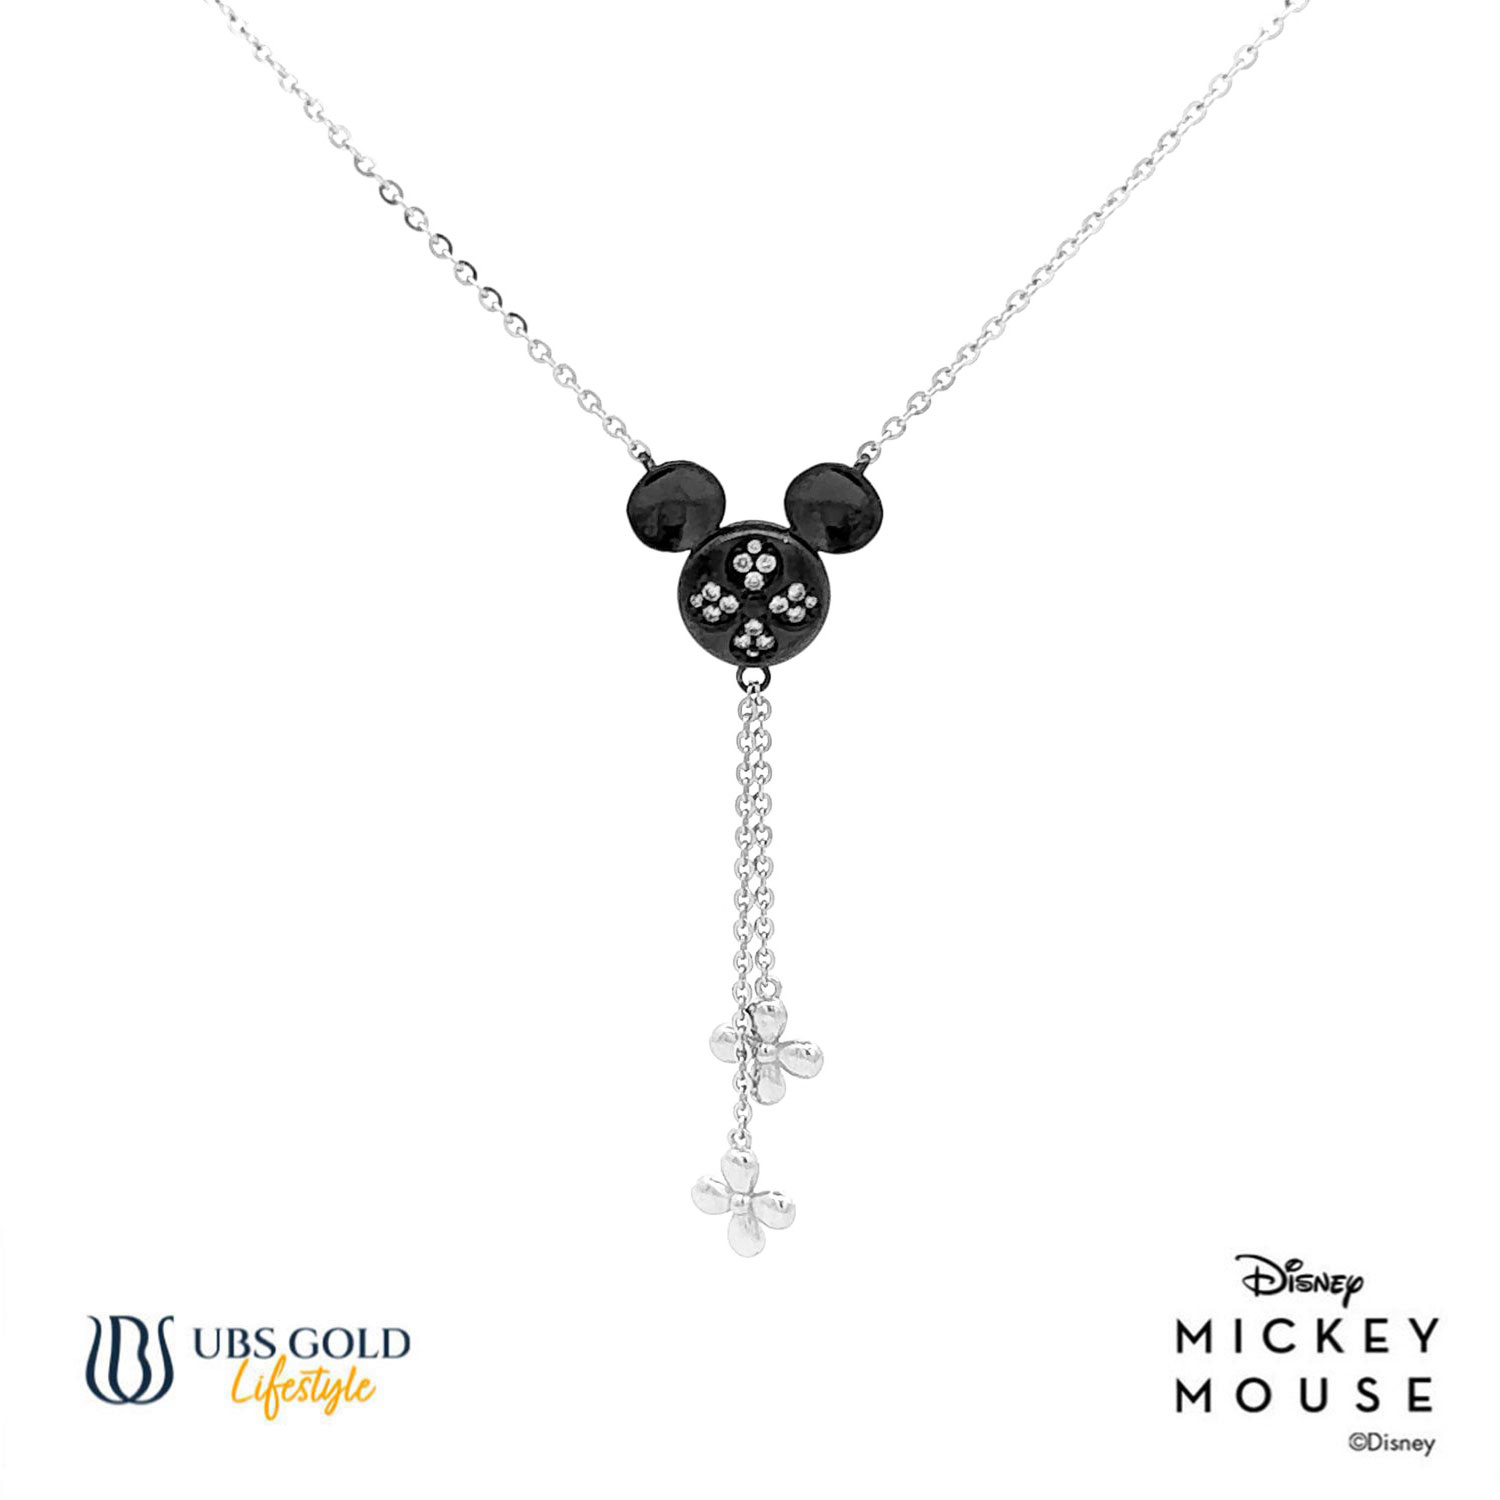 UBS Gold Kalung Emas Disney Mickey Mouse - KKY0464 - 17K